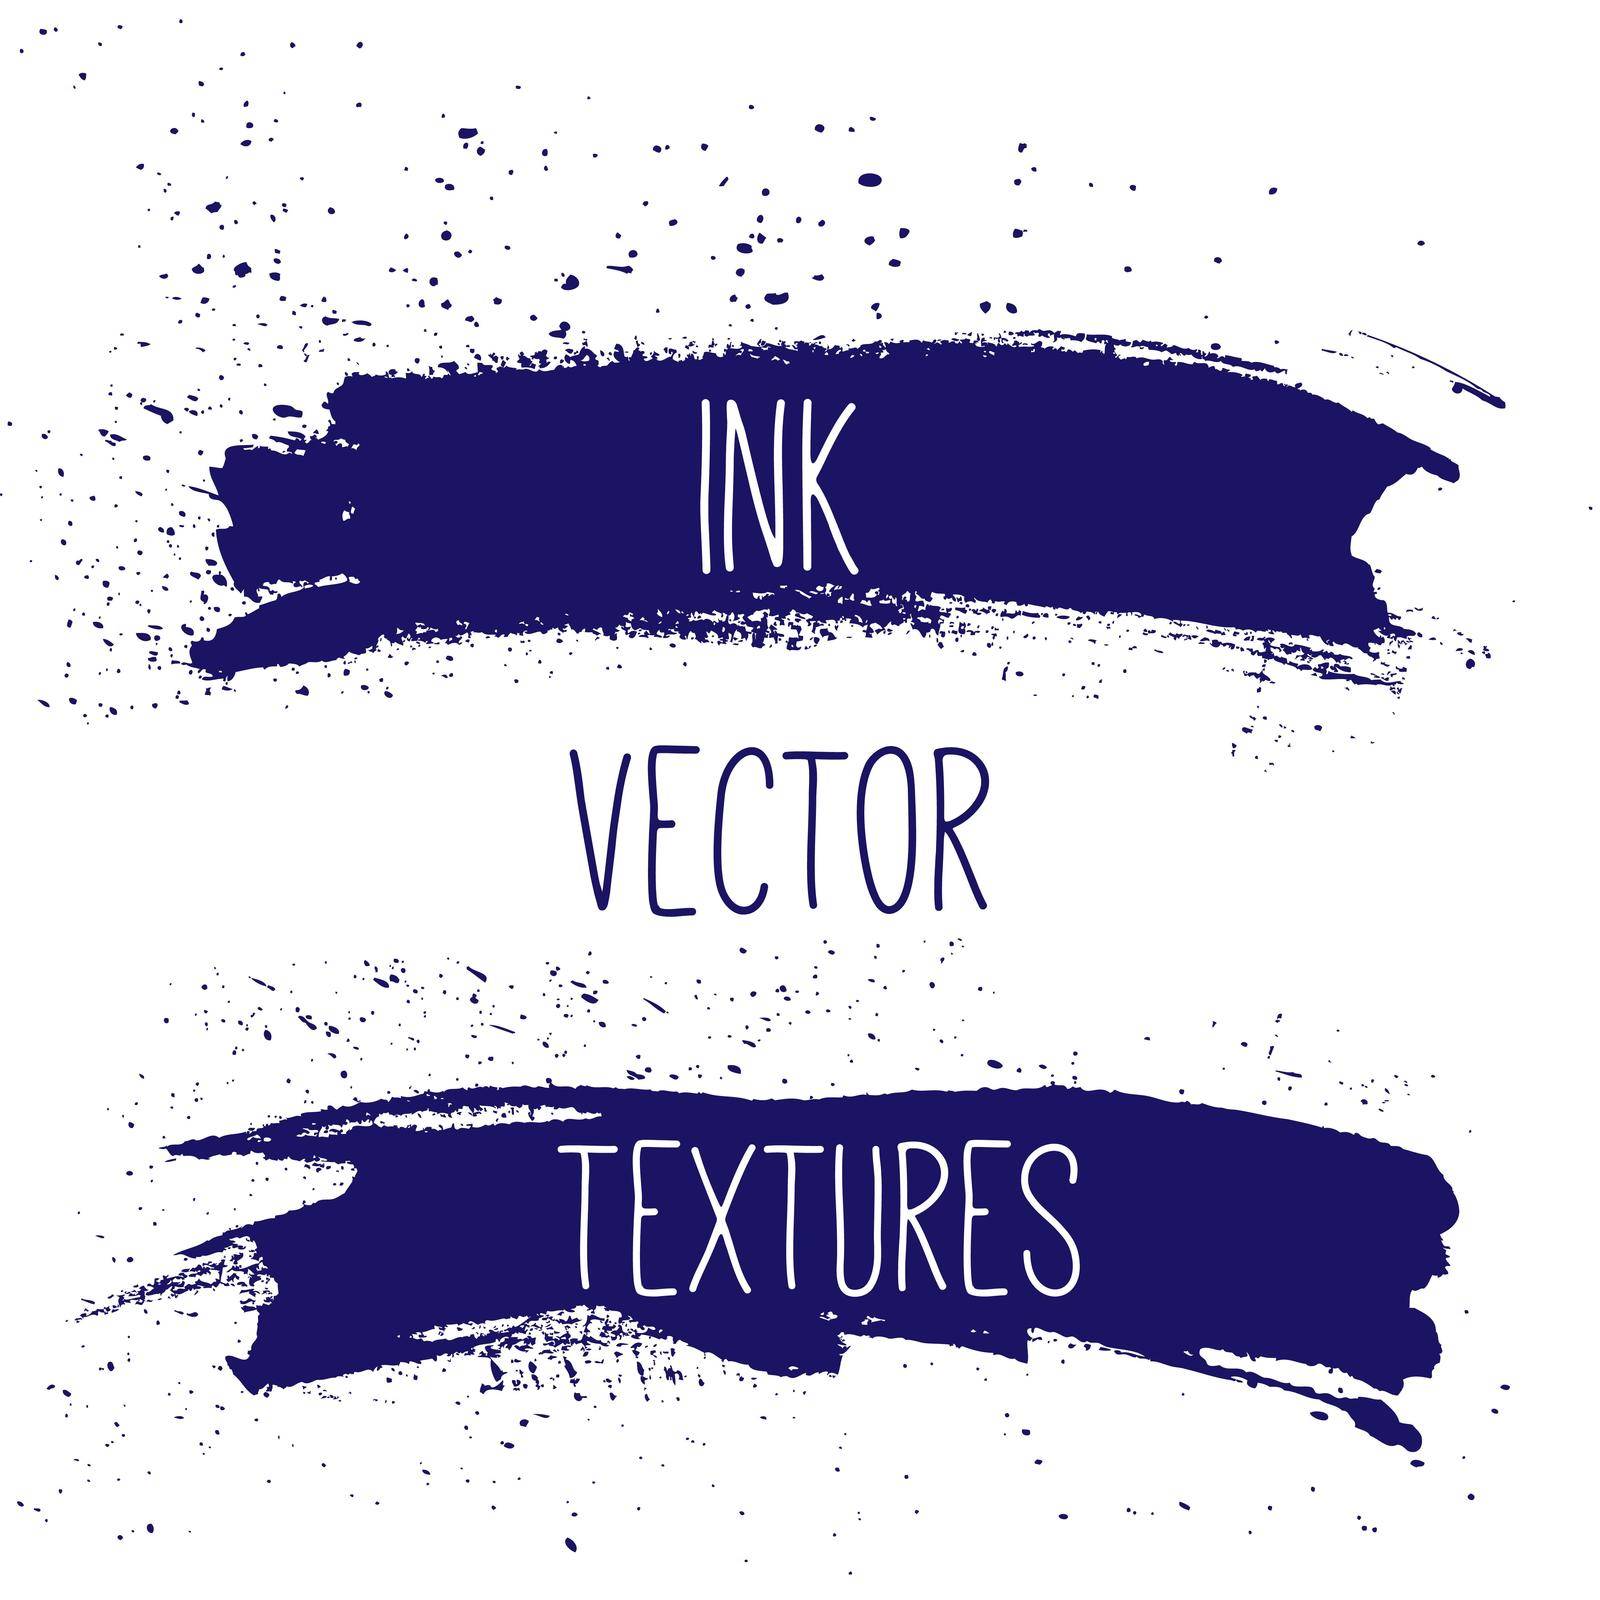 Ink Vector texture set. by varka